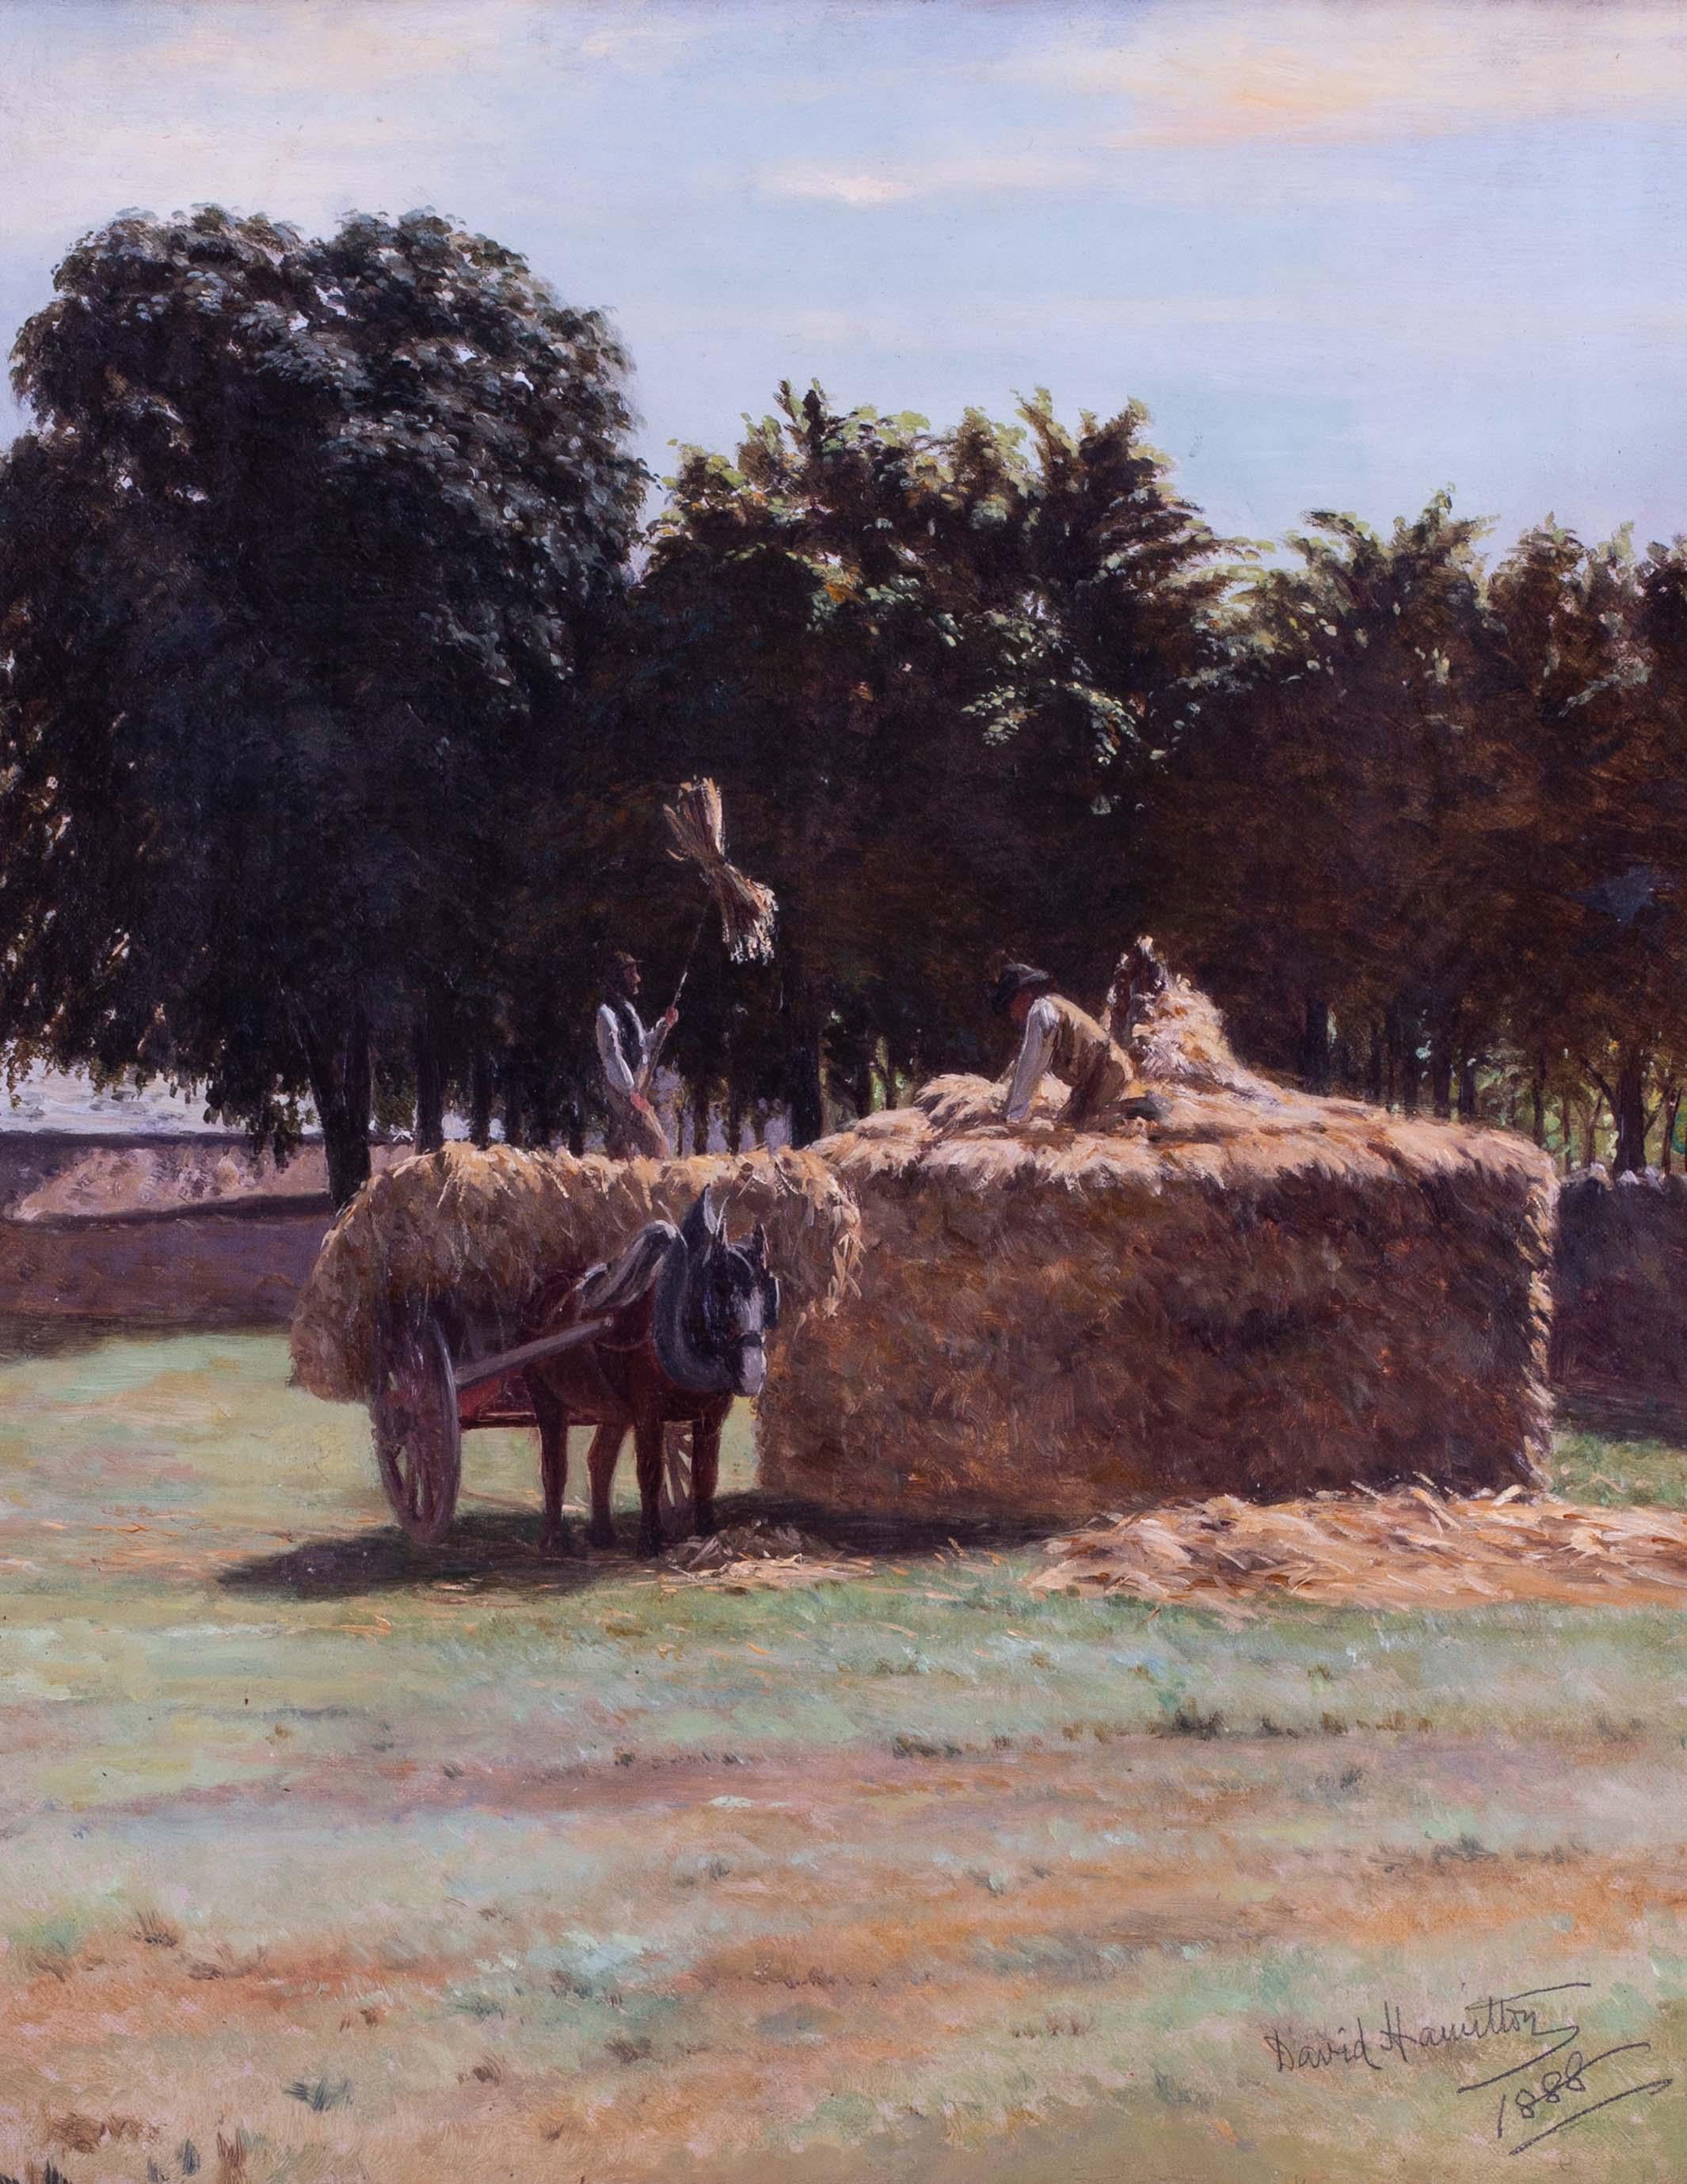 David  Hamilton (British, circa 1888)
Harvest time
Oil on canvas
Signed and dated `David Hamilton 1888’ (lower right)
20.1/8 x 16 in. (51.2 x 40.8 cm.)
